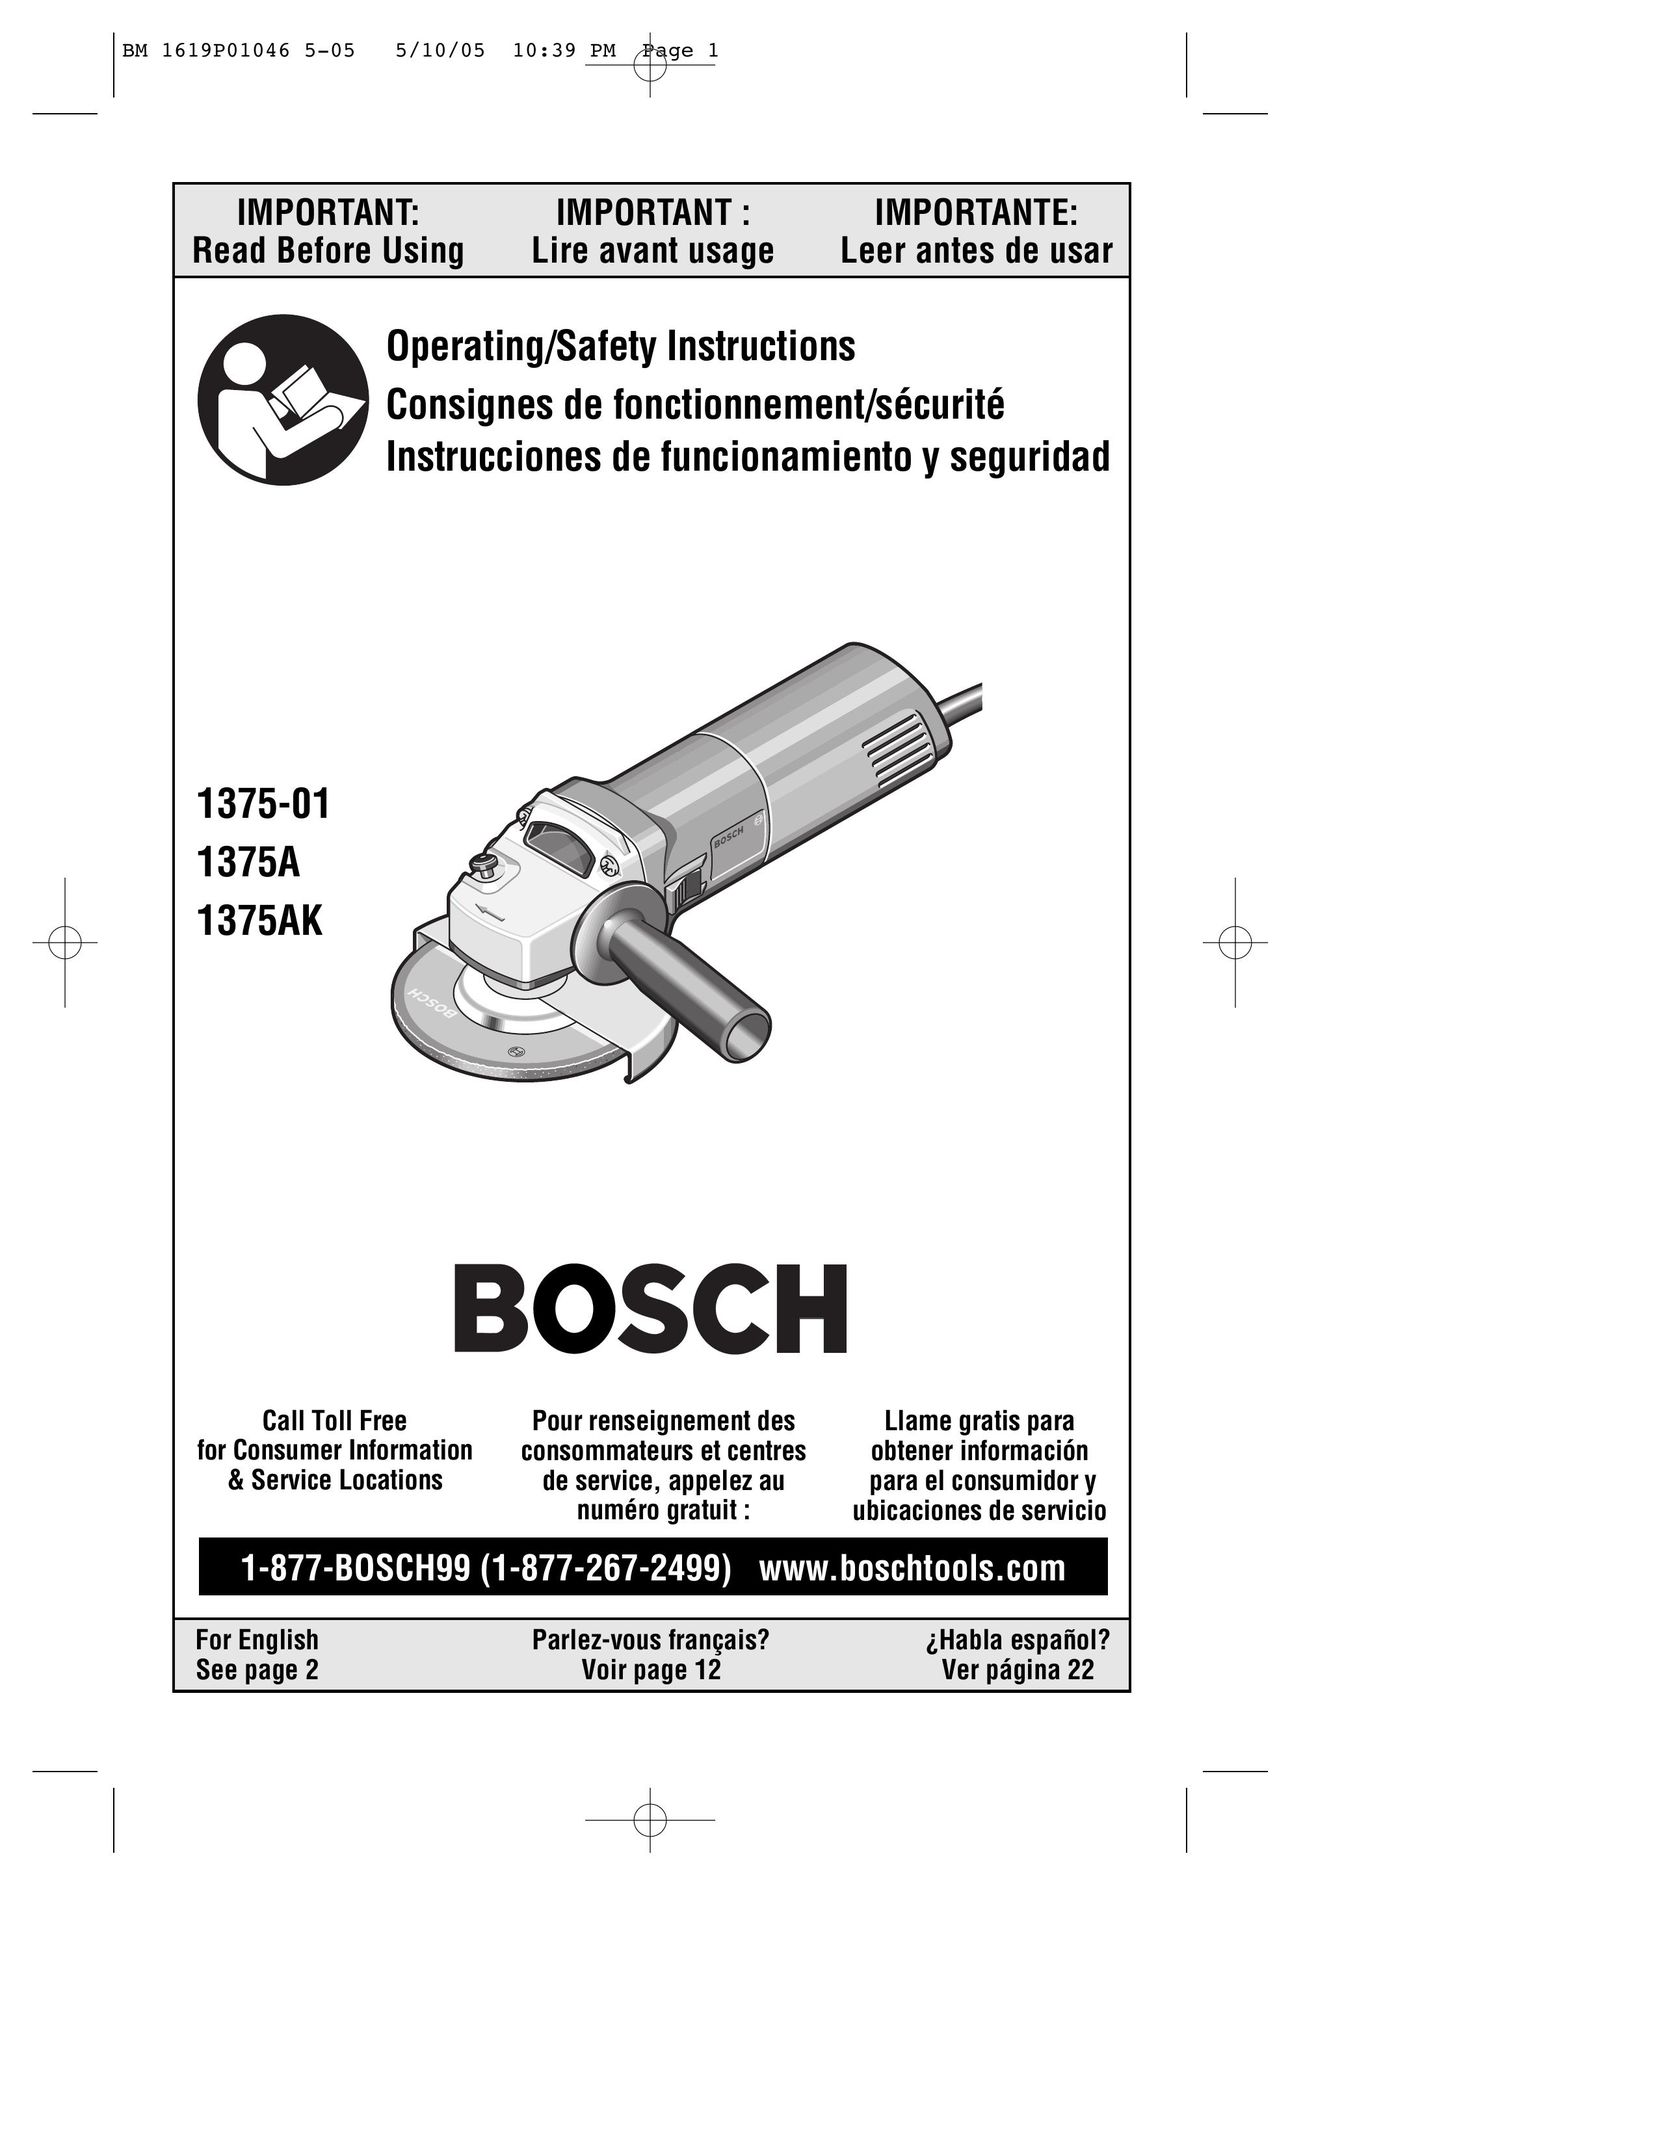 Bosch Power Tools 1375A Drill User Manual